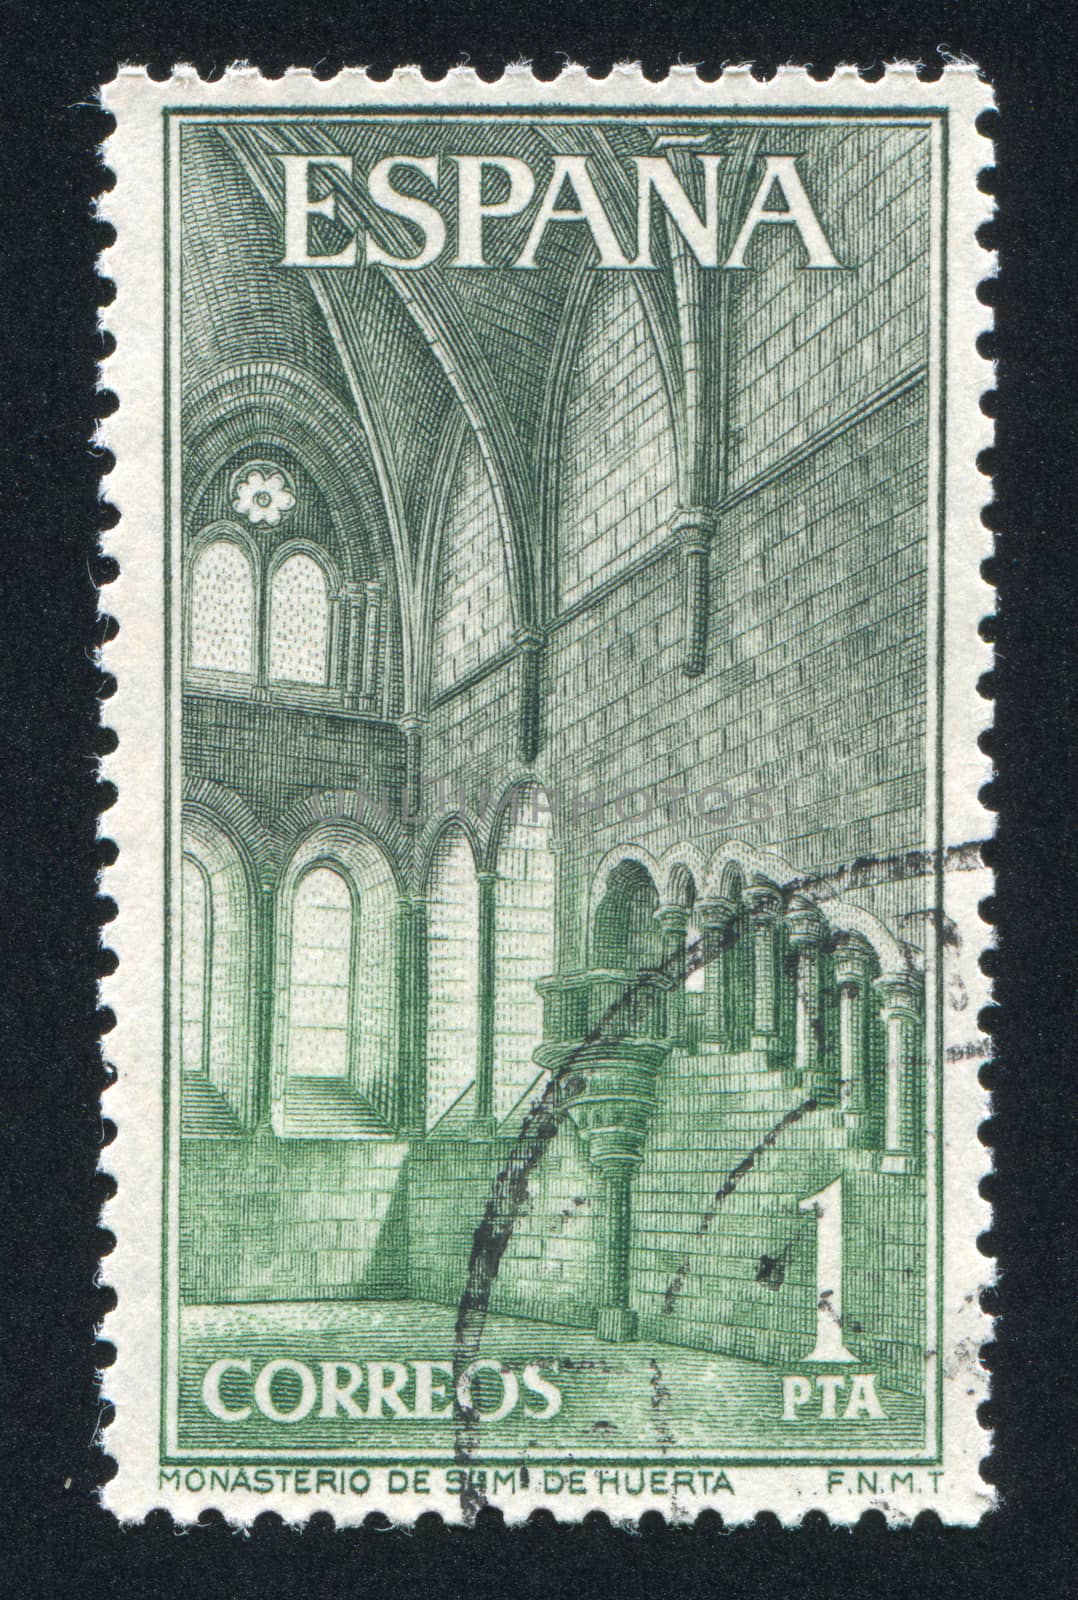 SPAIN - CIRCA 1964: stamp printed by Spain, shows Great Hall, Santa Maria de Huerta Monastery, circa 1964